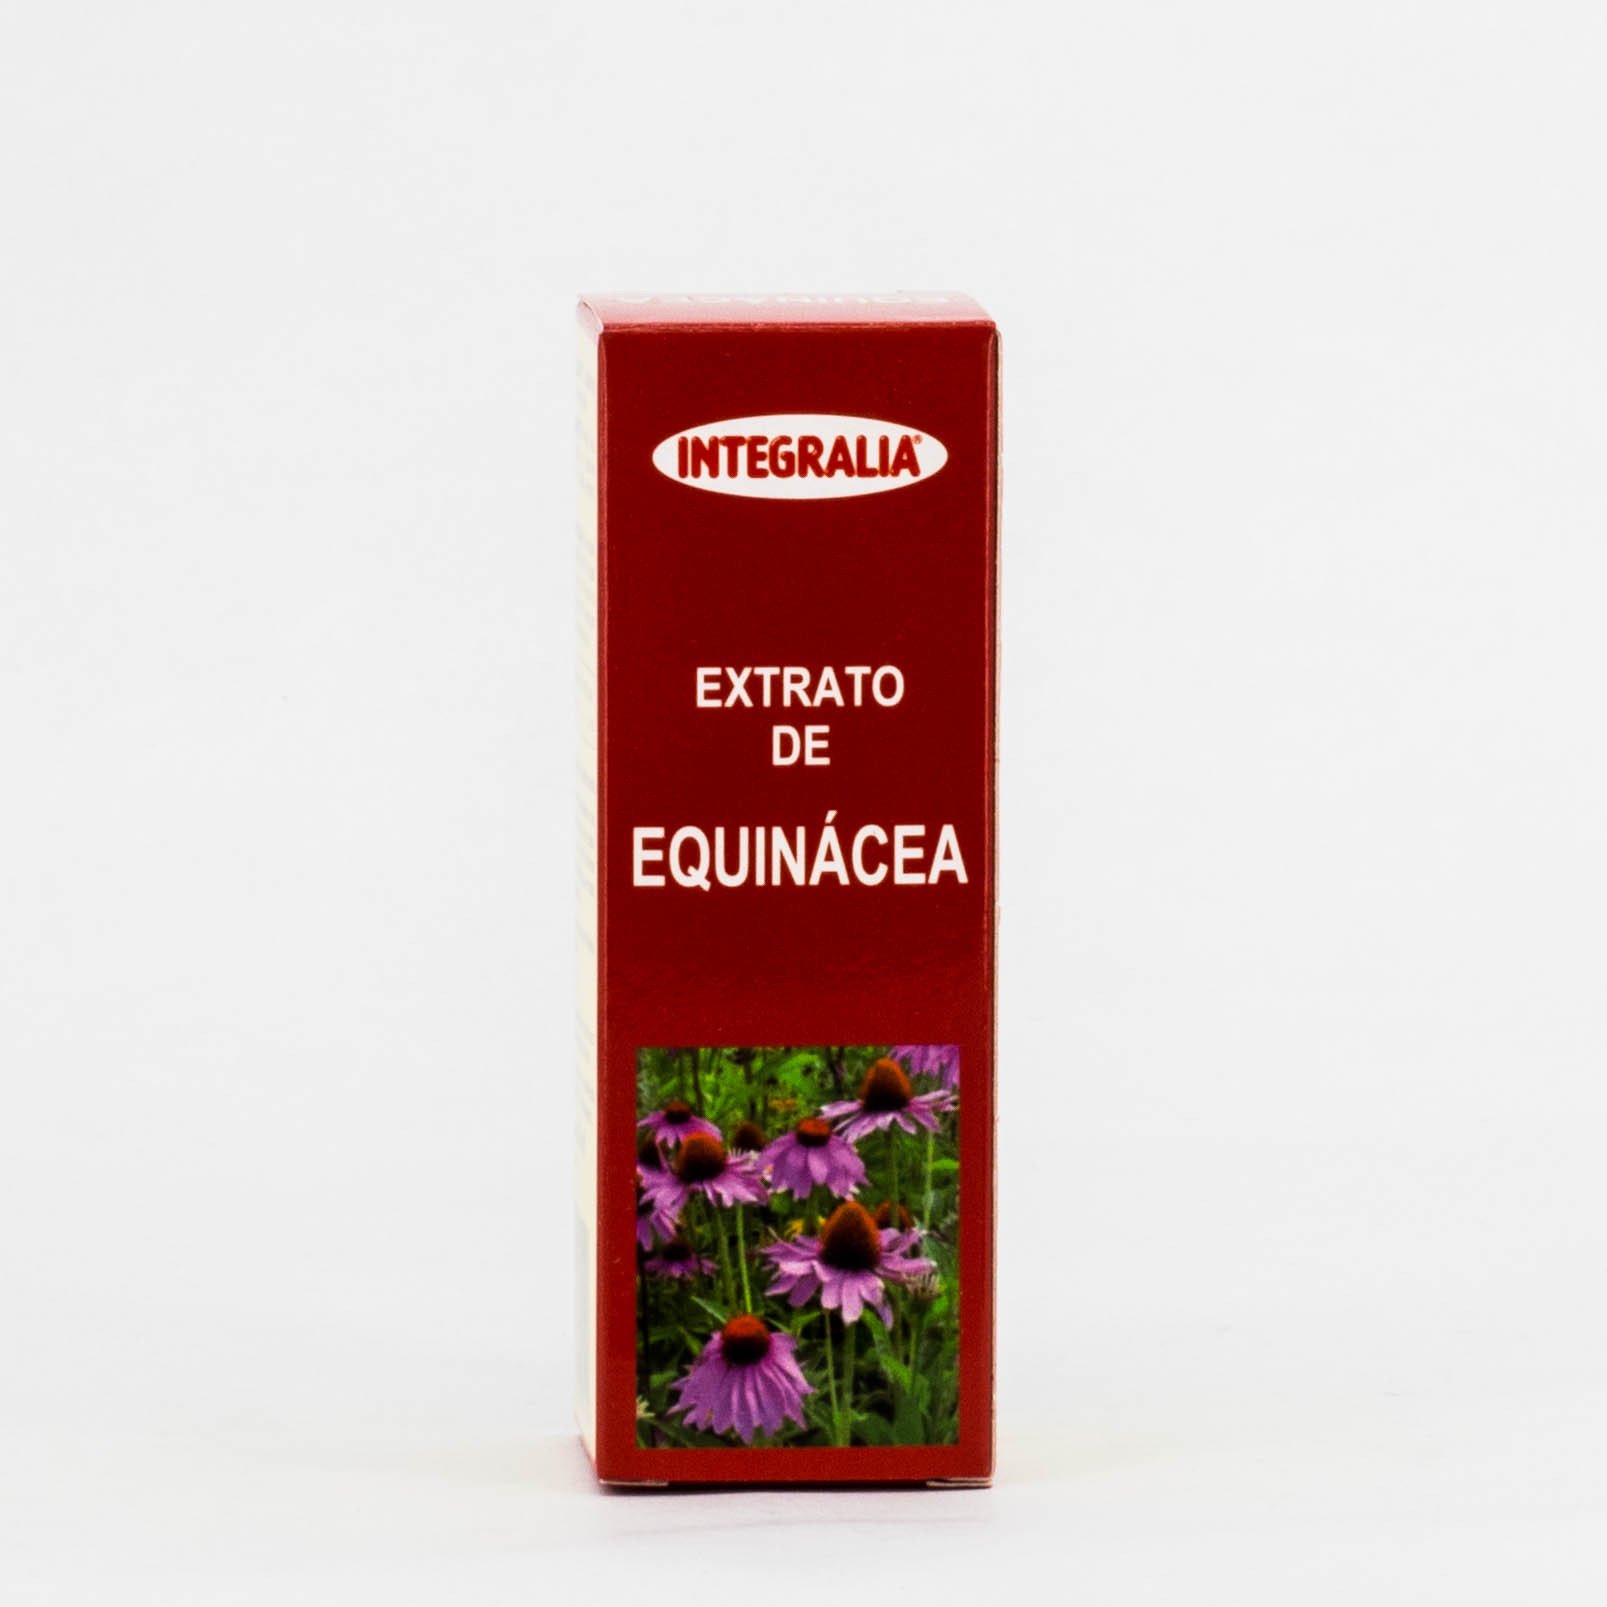 Integralia Extracto de Equinacea, 50ml.